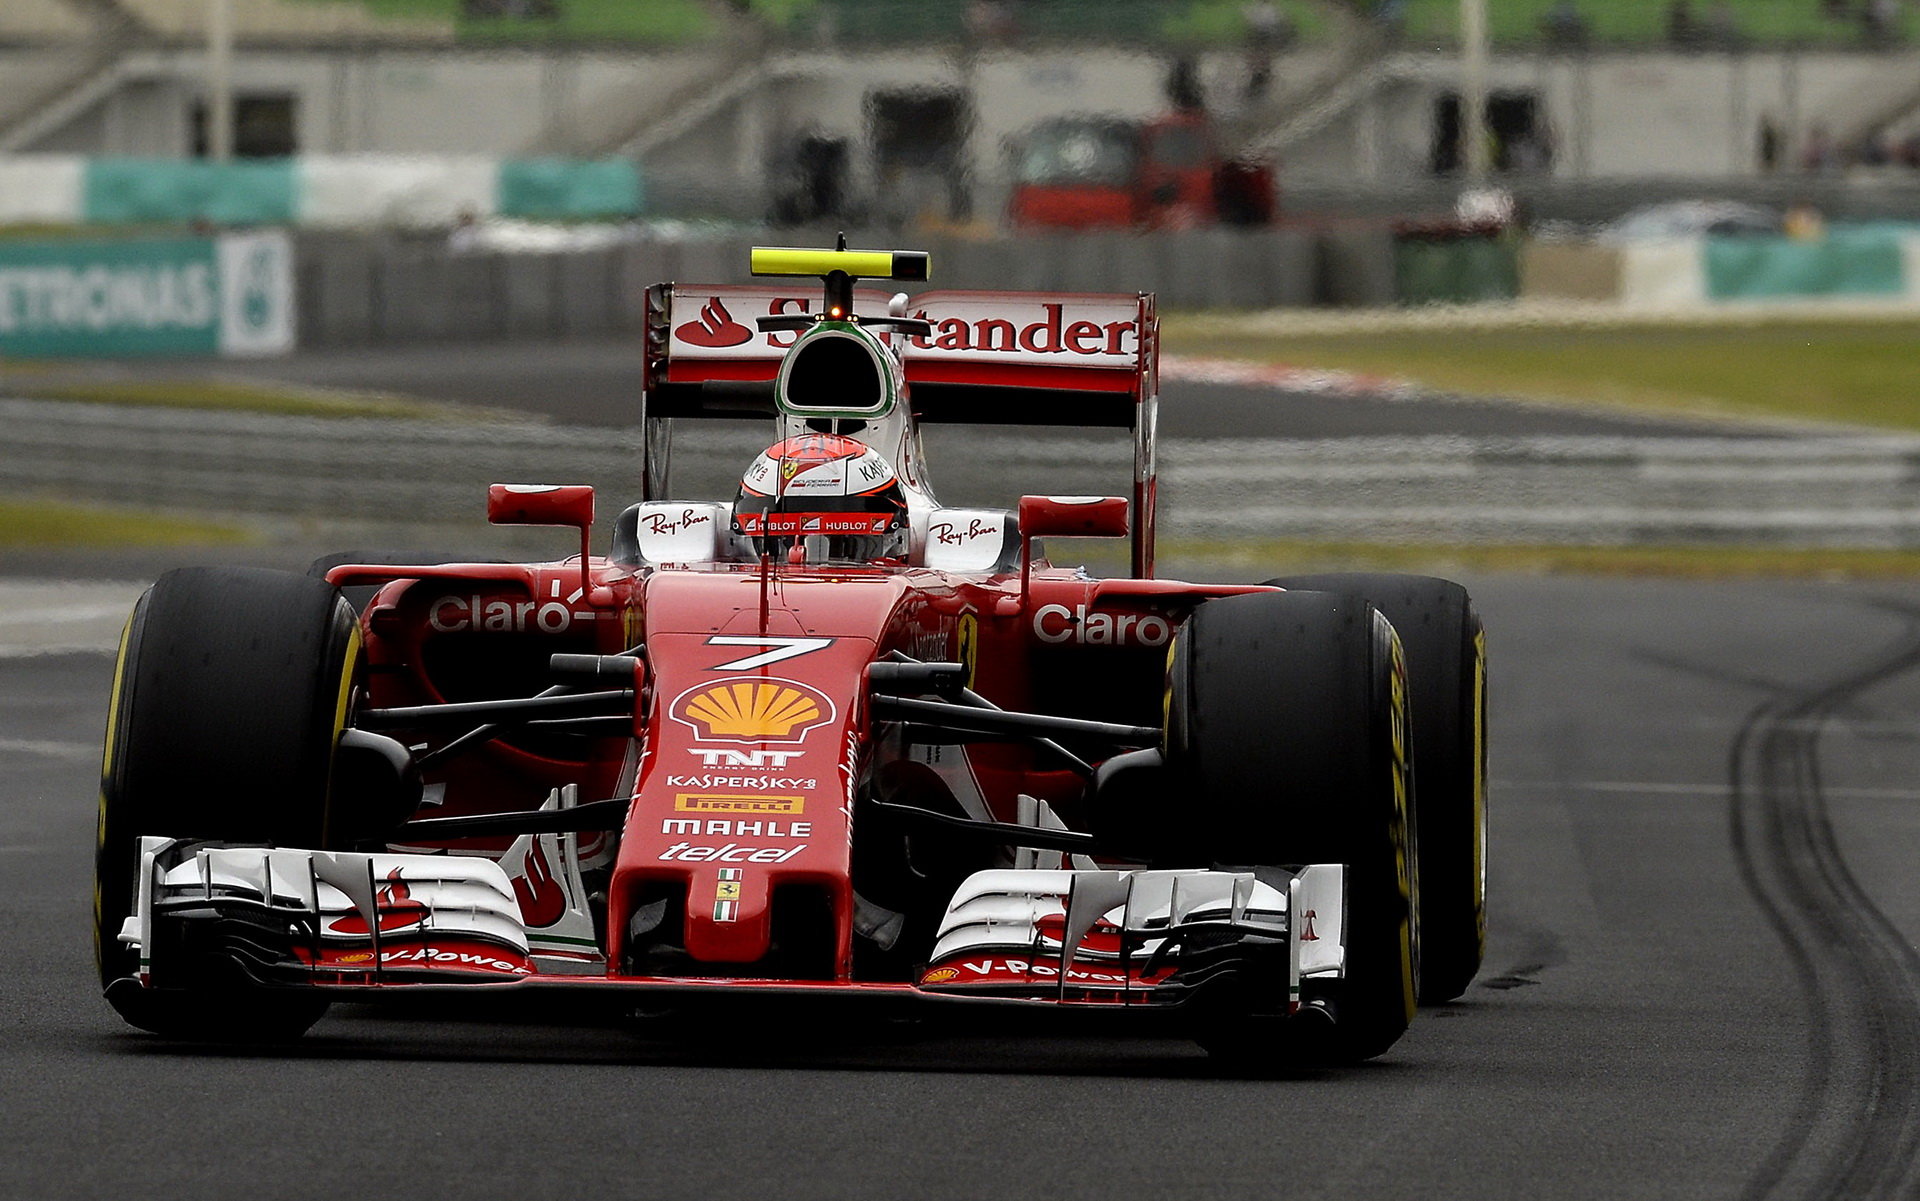 Kimi Räikkönen v kvalifikaci v Malajsii